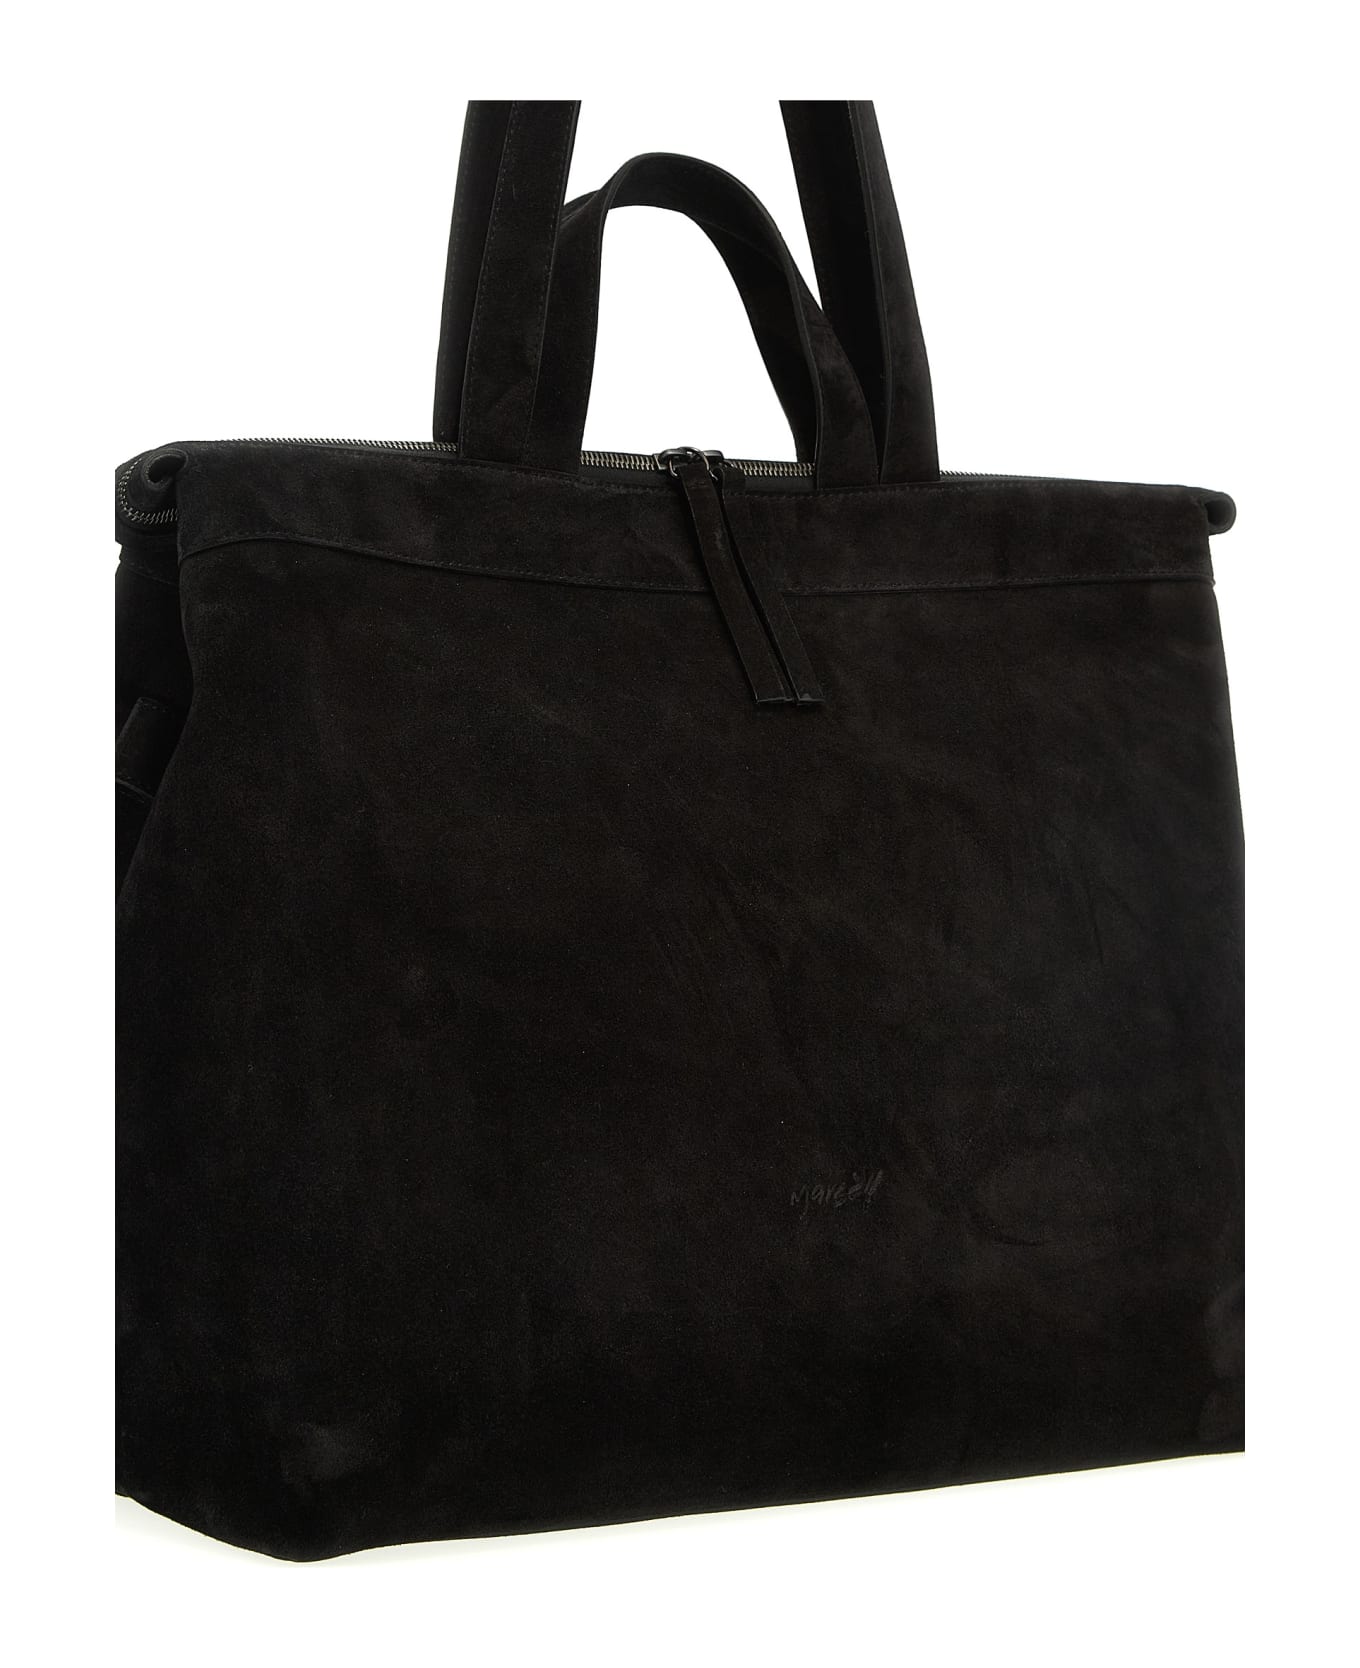 Marsell 'borso' Shopping Bag - Black  